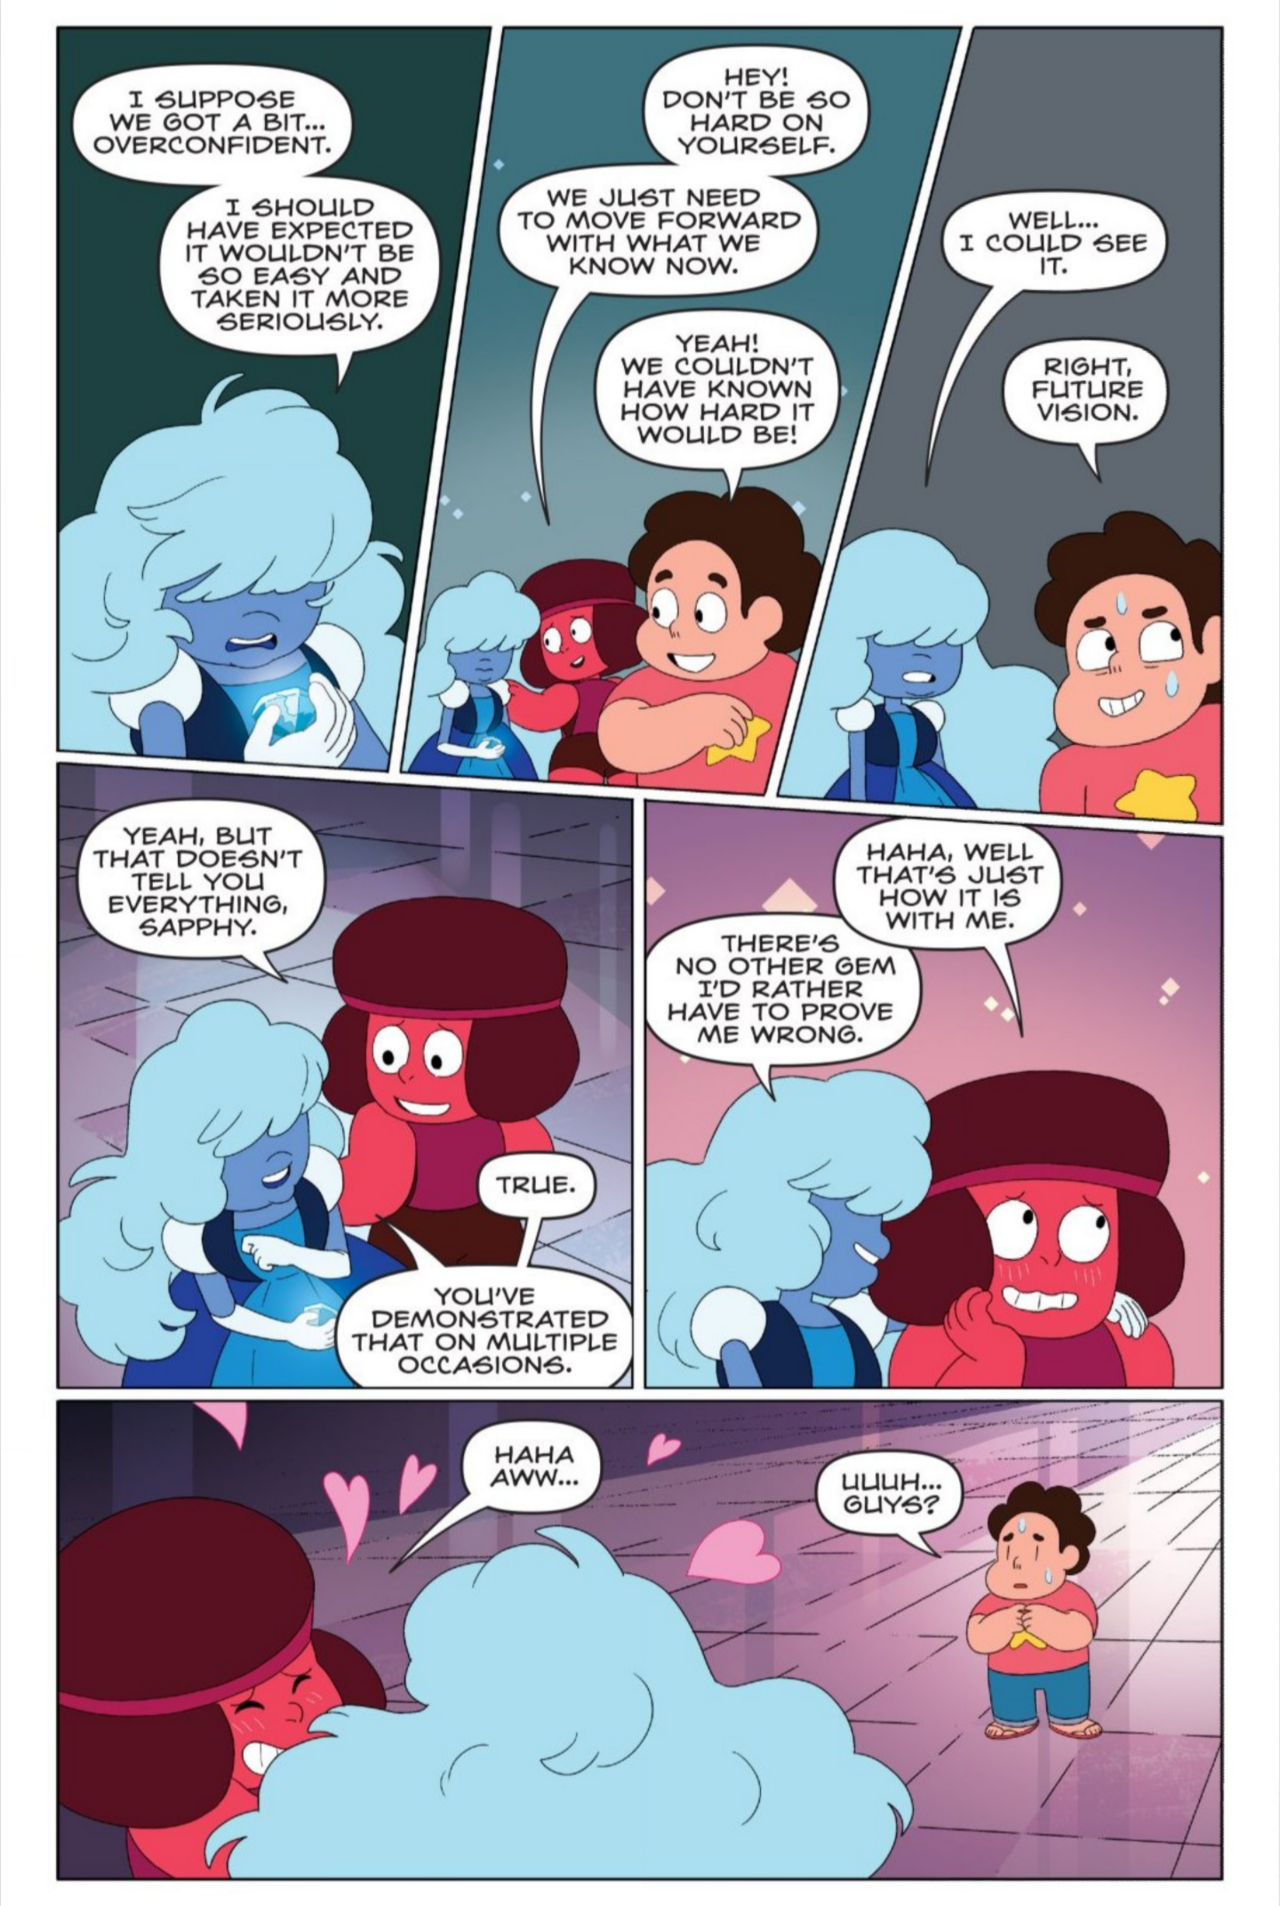 love-takes-work:  Steven Universe comic #15 official summary:“Garnet takes Steven